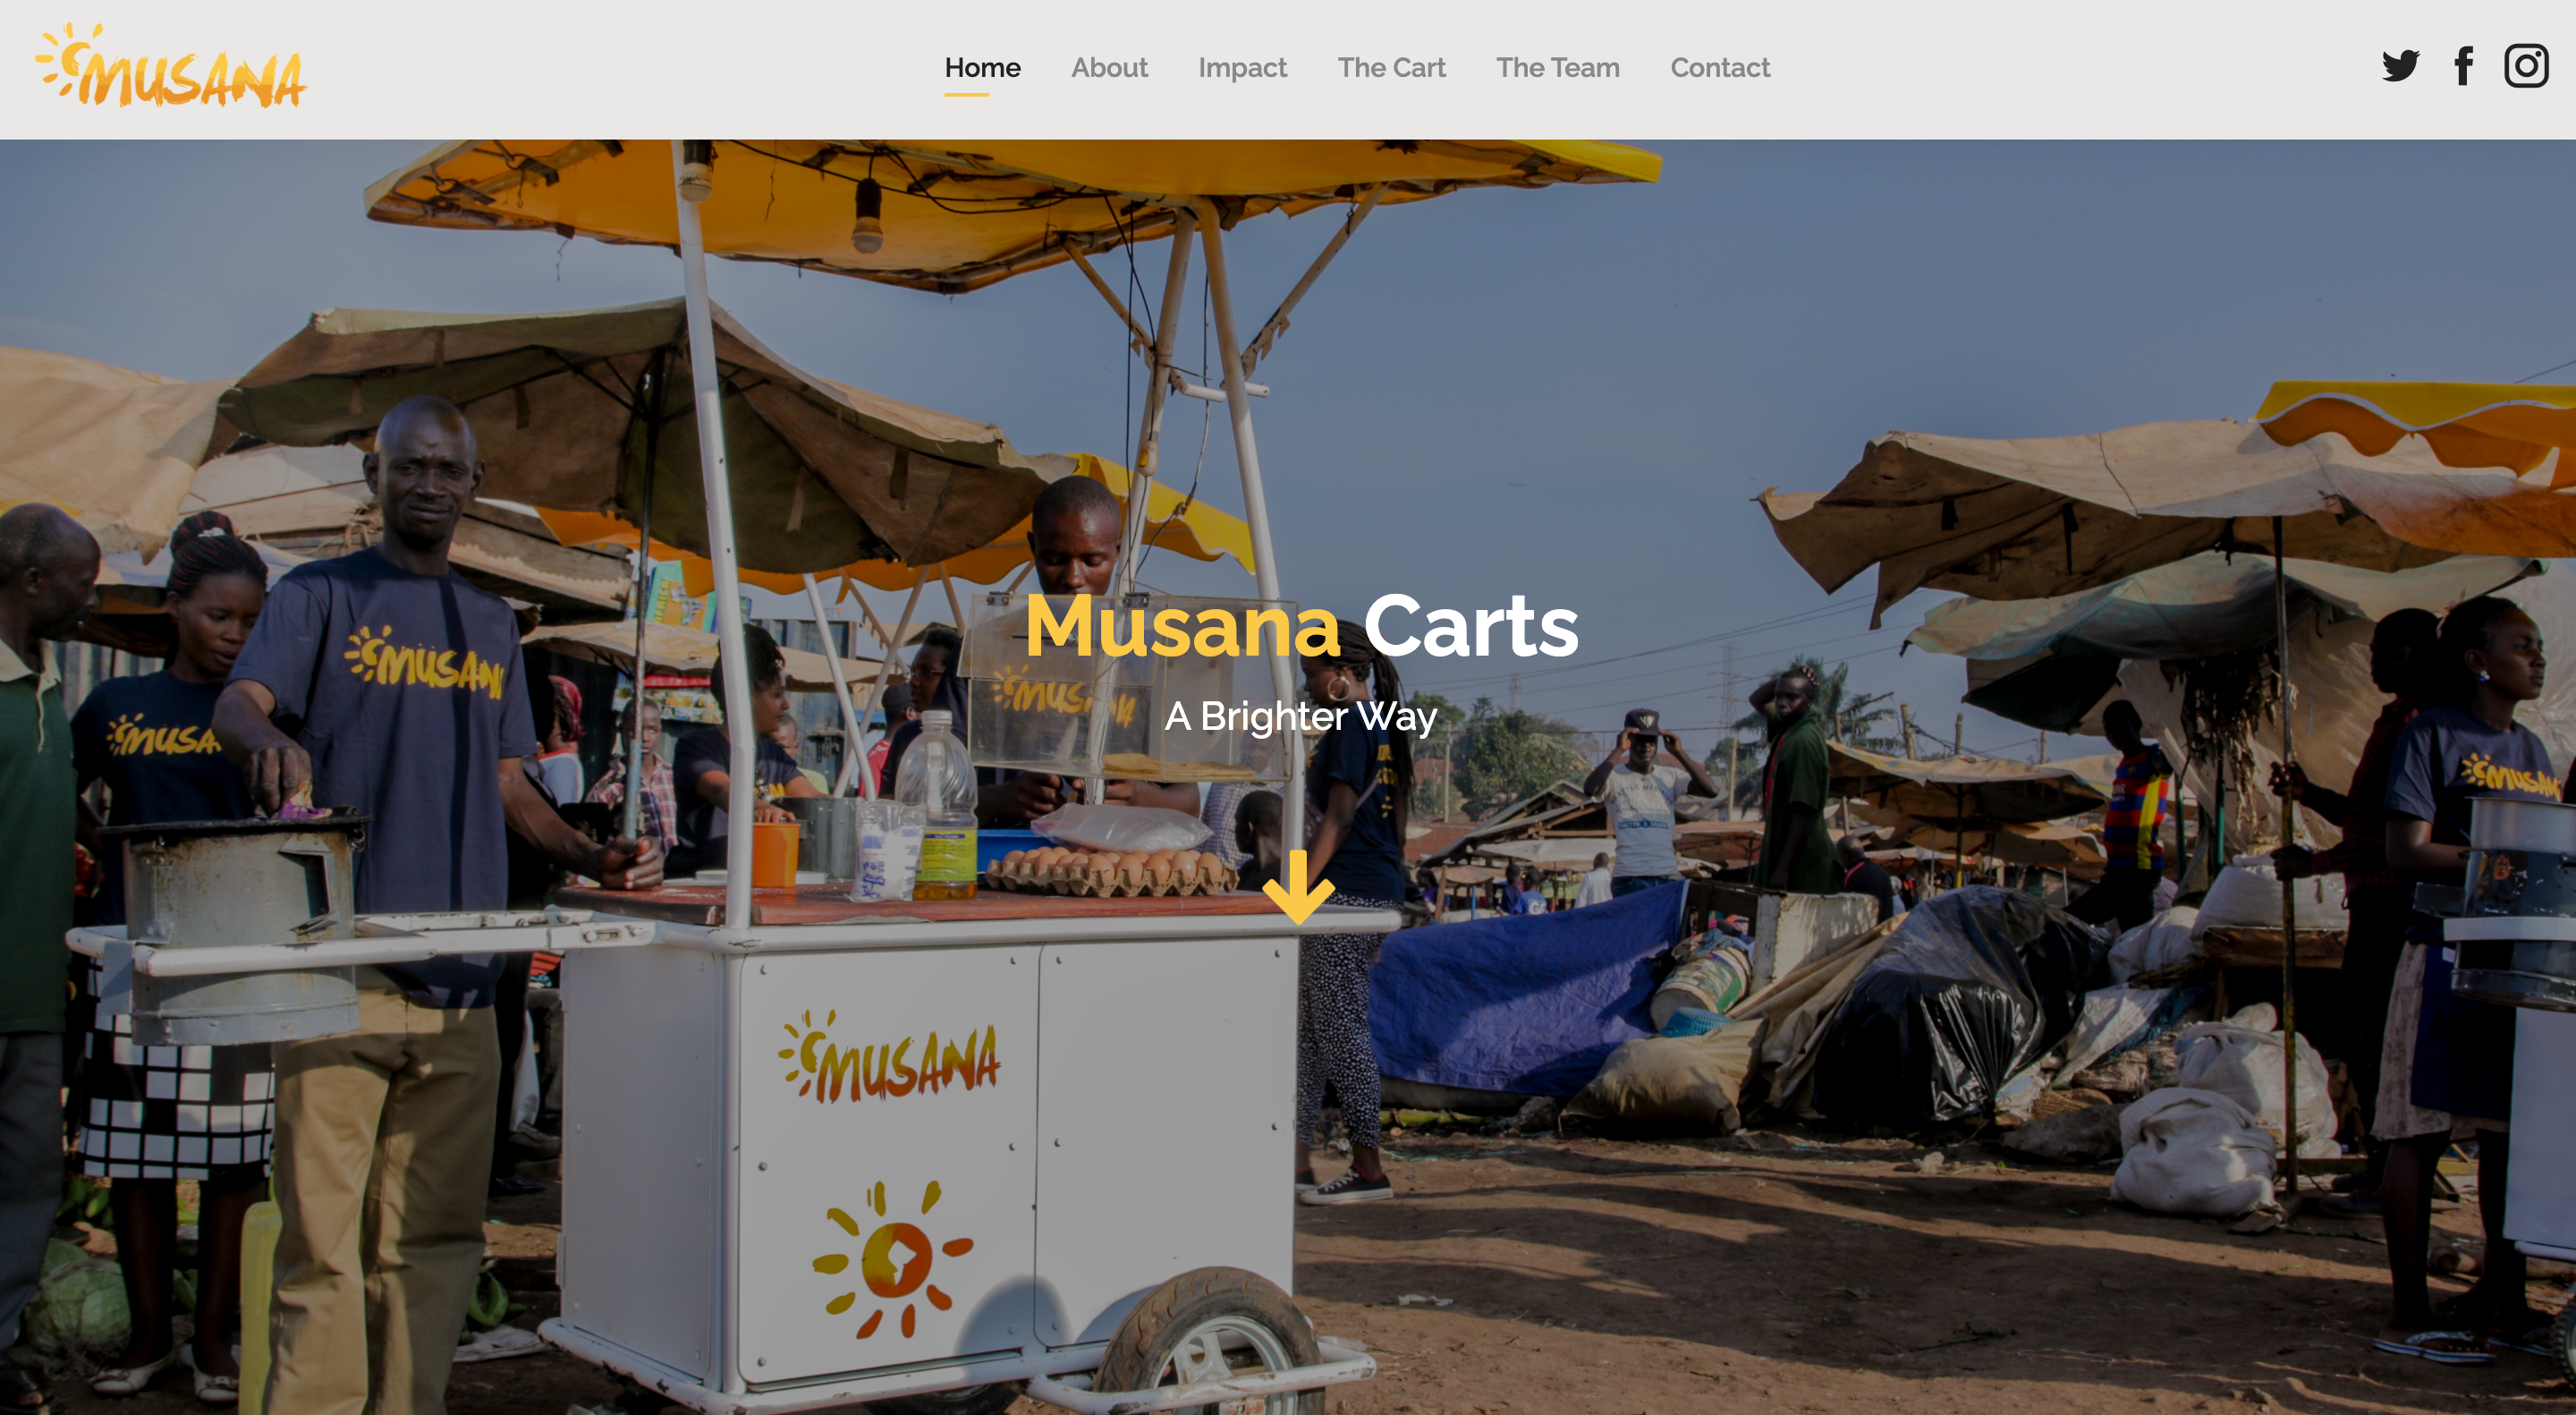 Musana Carts